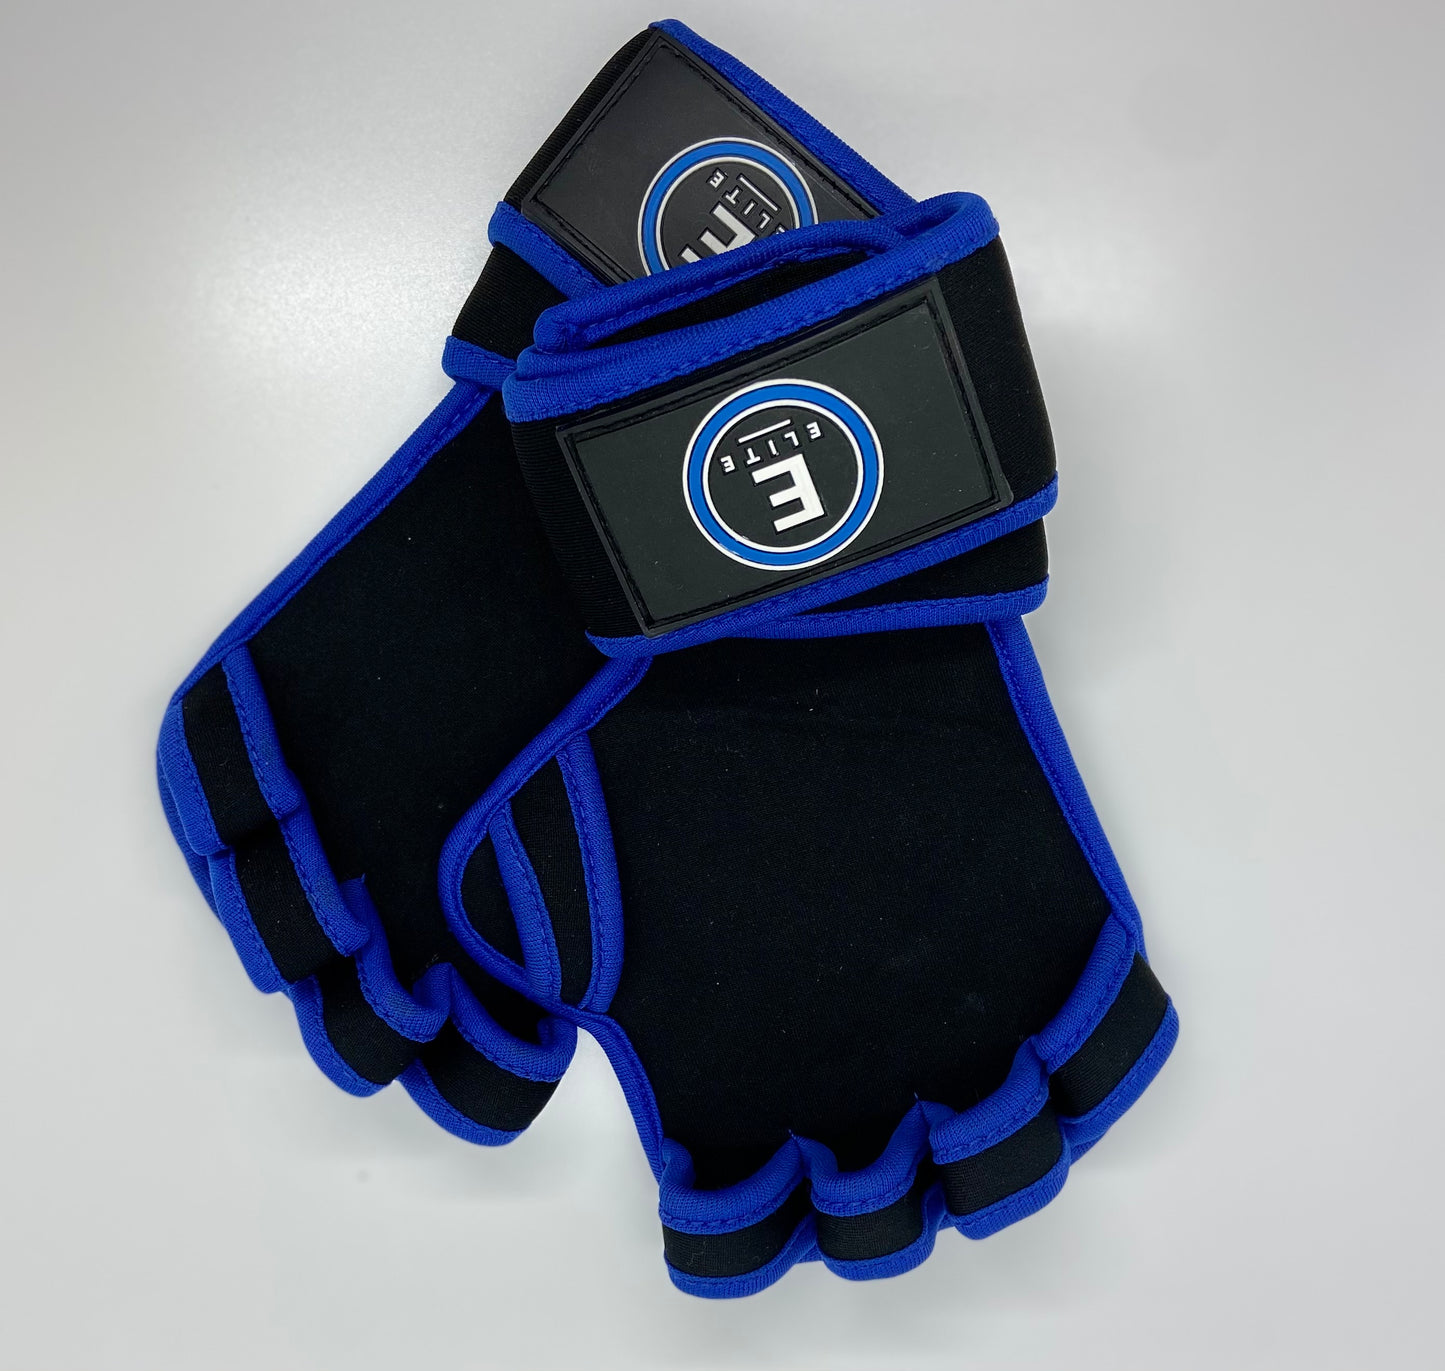 IAMELITE® Brand  Super Grip Weight Lifting Gloves